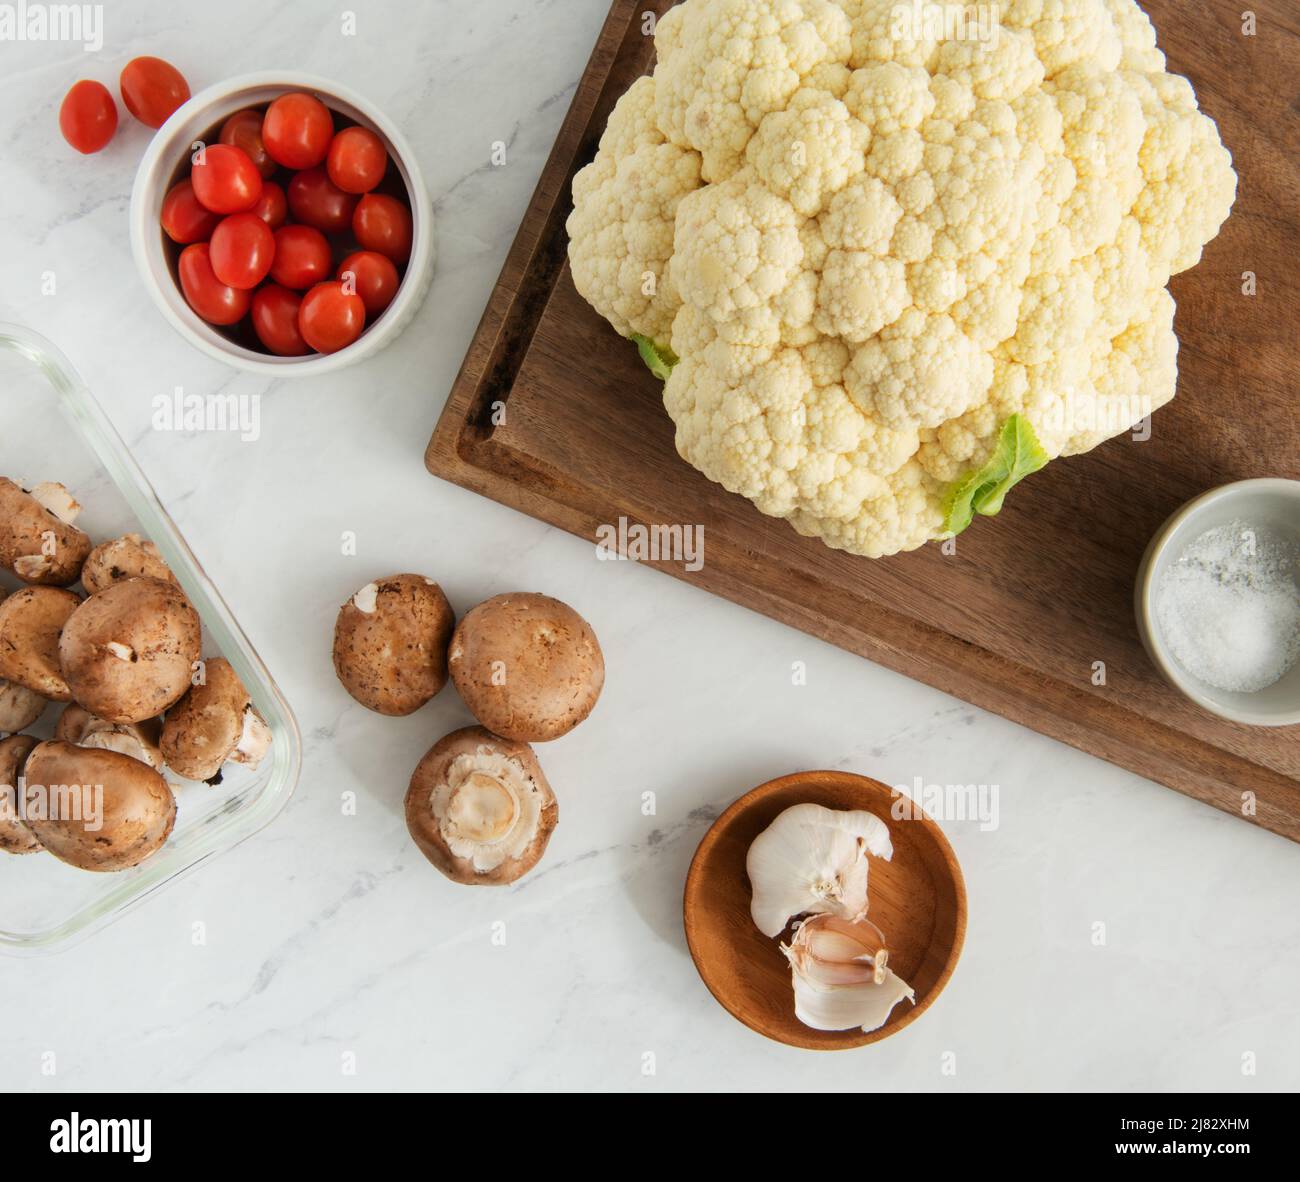 Cooking scene with Cauliflower, mushrooms, garlic, and tomatoes Stock Photo